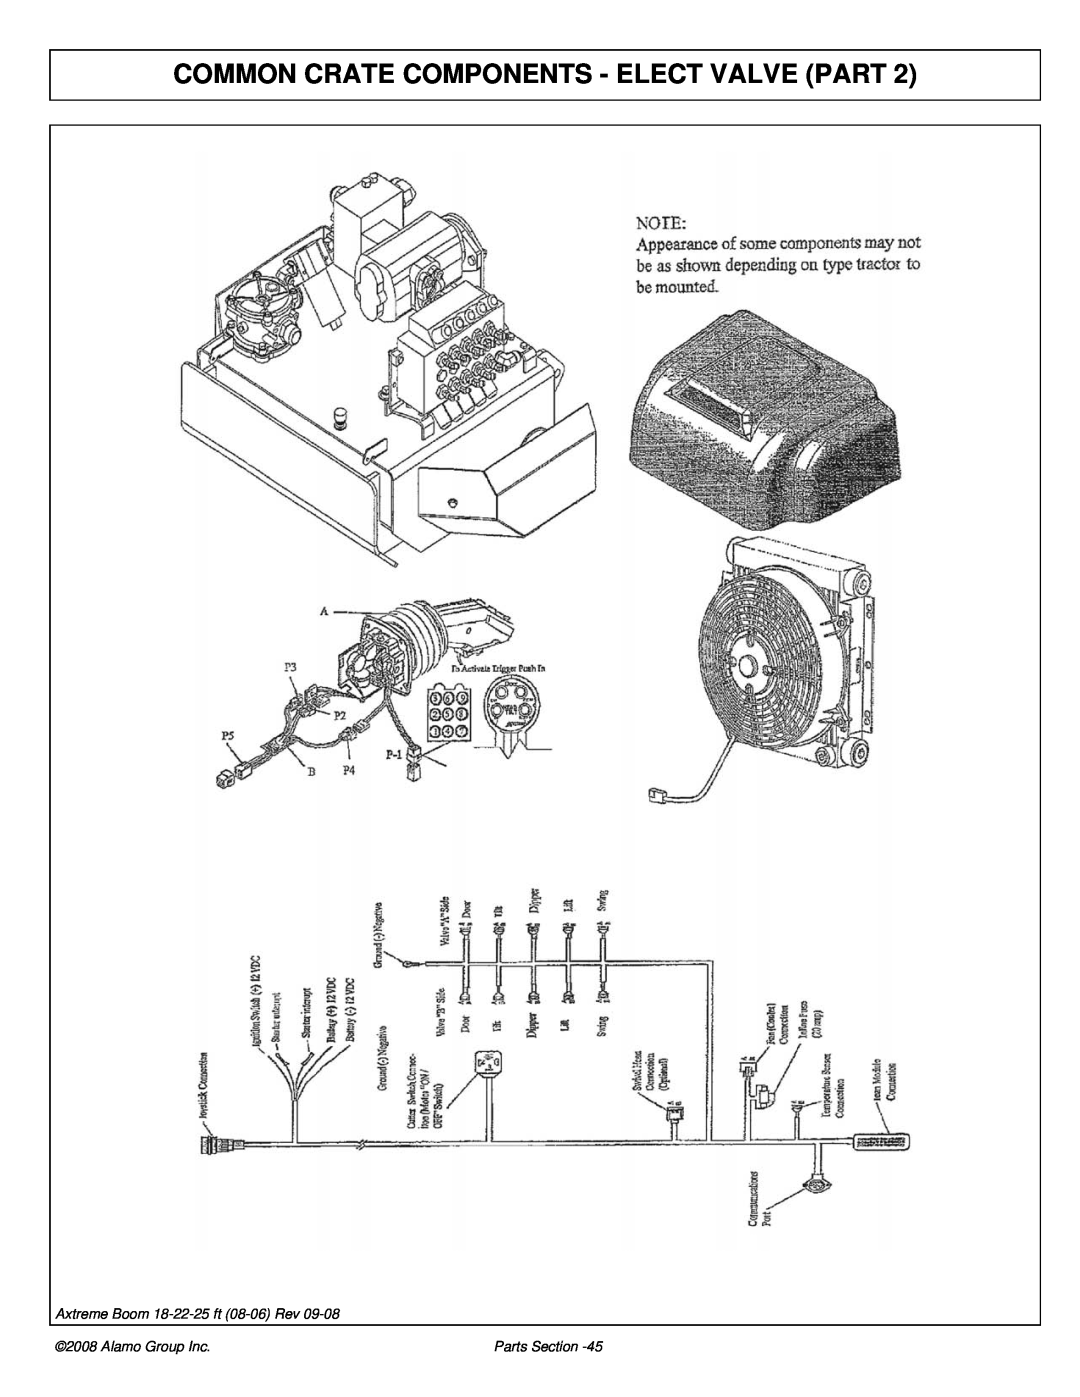 Alamo FC-P-0002 manual Common Crate Components - Elect Valve Part, Axtreme Boom 18-22-25 ft 08-06 Rev, Alamo Group Inc 